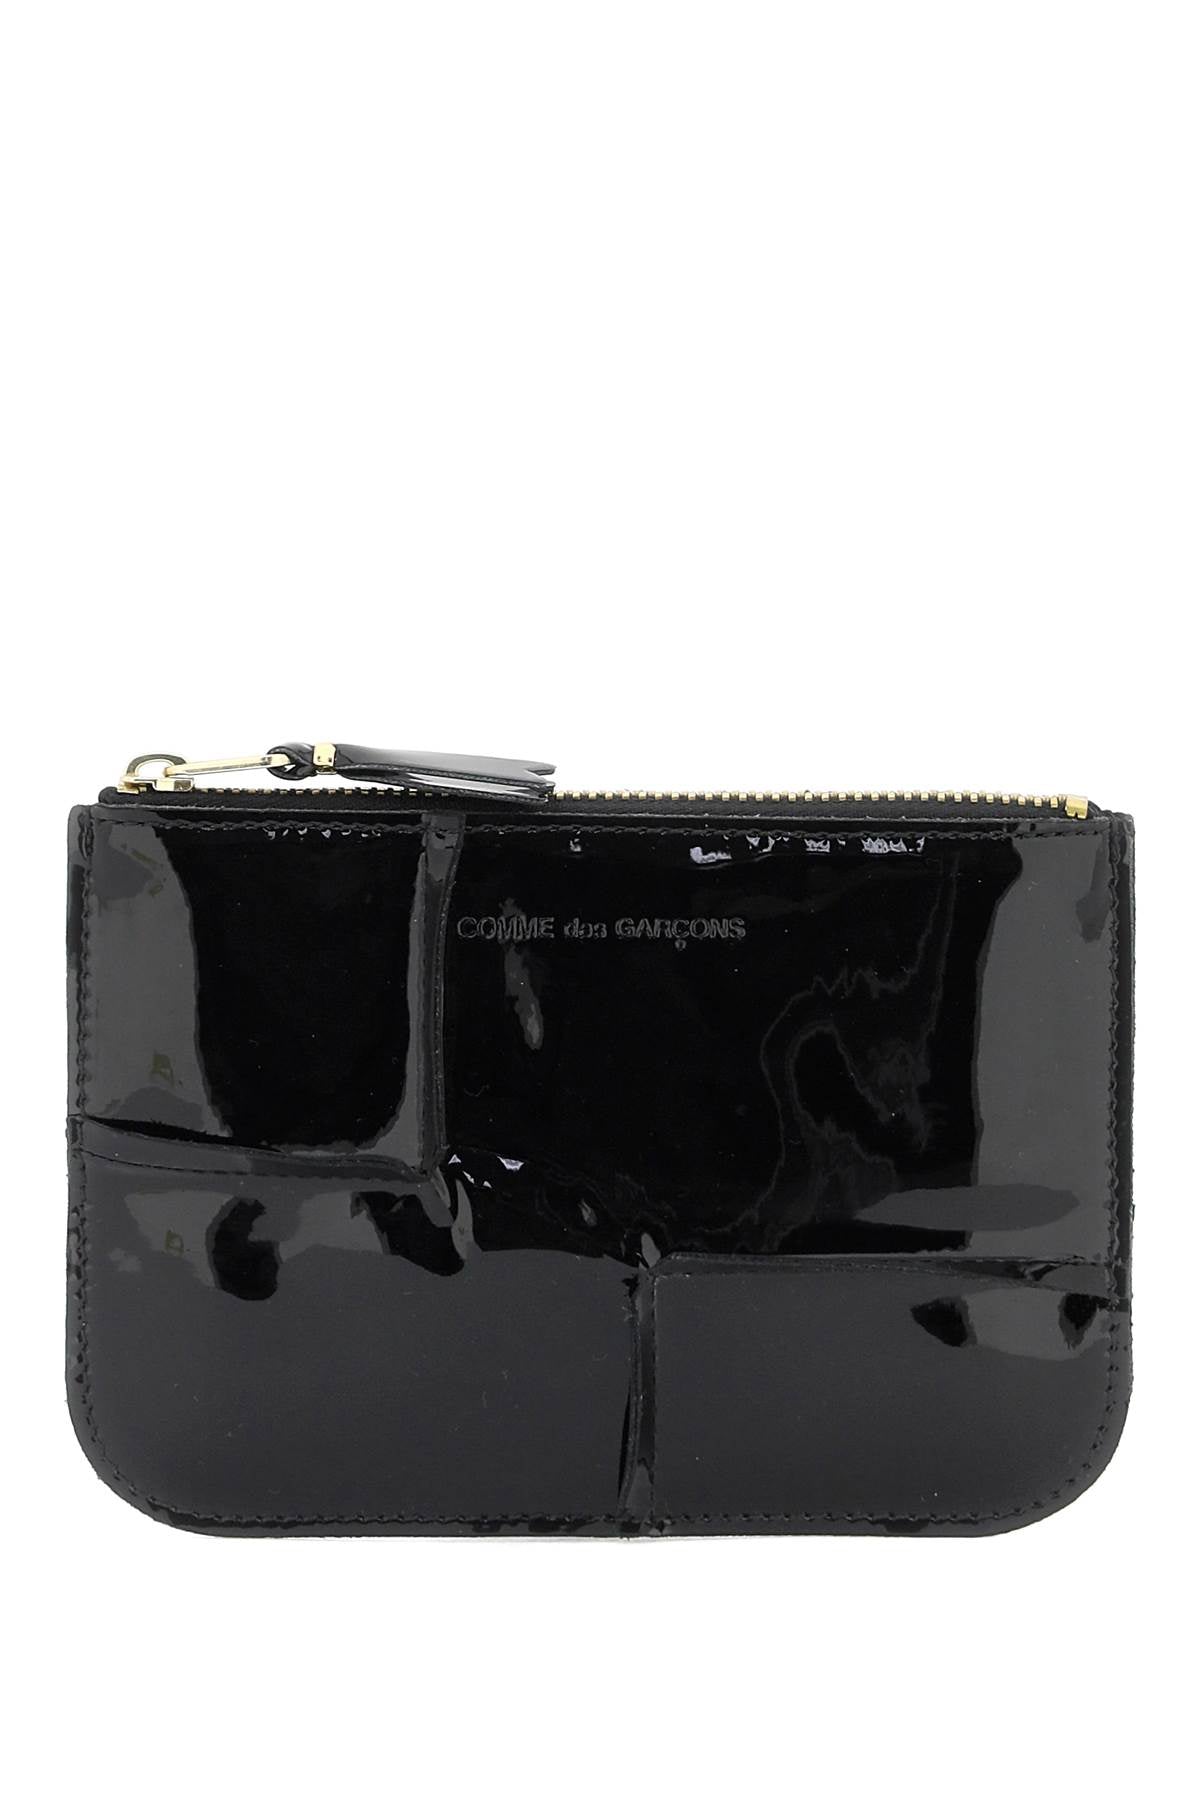 Comme Des Garcons Wallet Zip Around Patent Leather Wallet With Zipper   Black